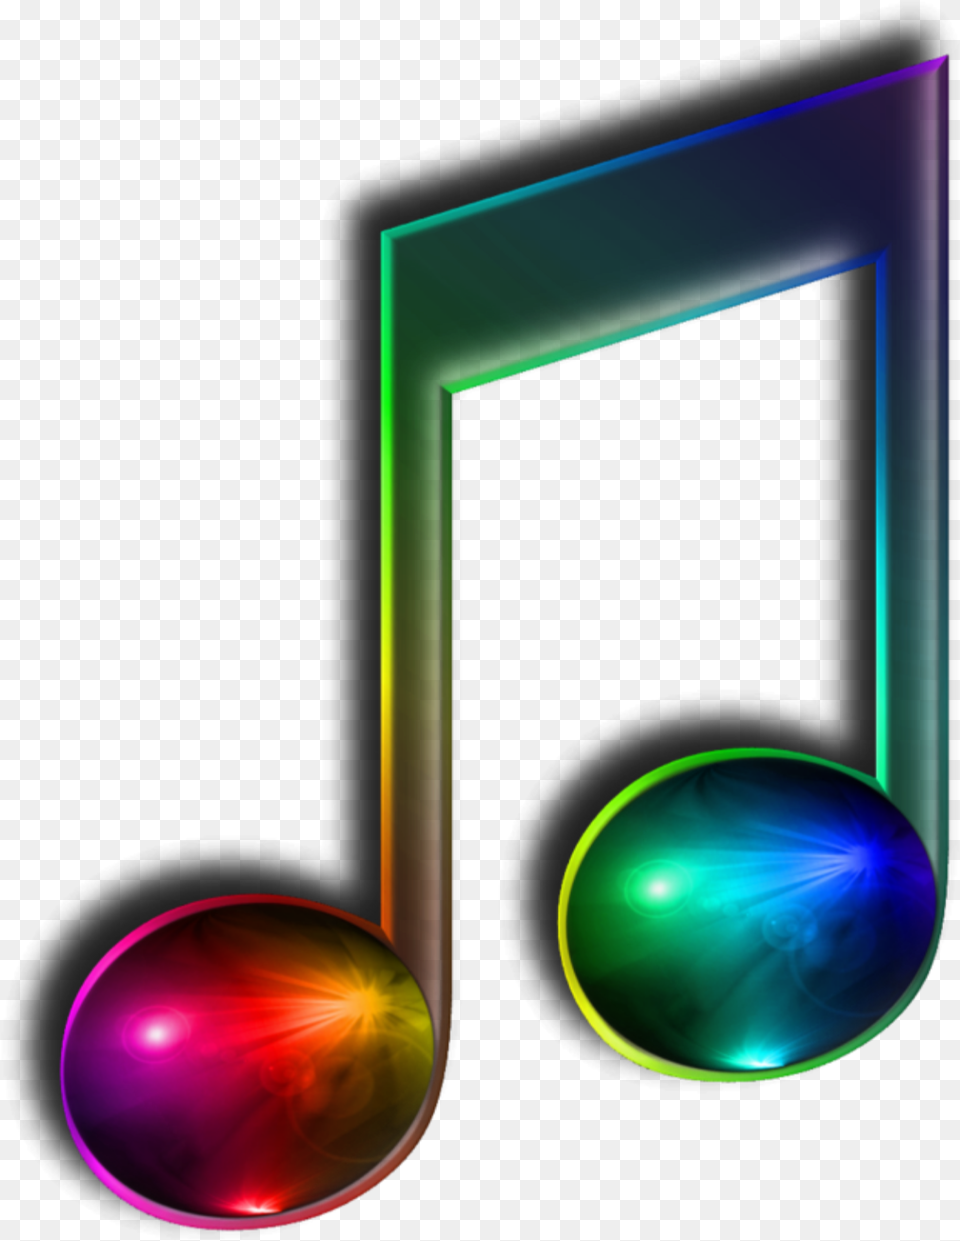 Mq Rainbow Music Notes Note Sticker By Marras Rainbow Music Note, Light, Sphere, Lighting Free Png